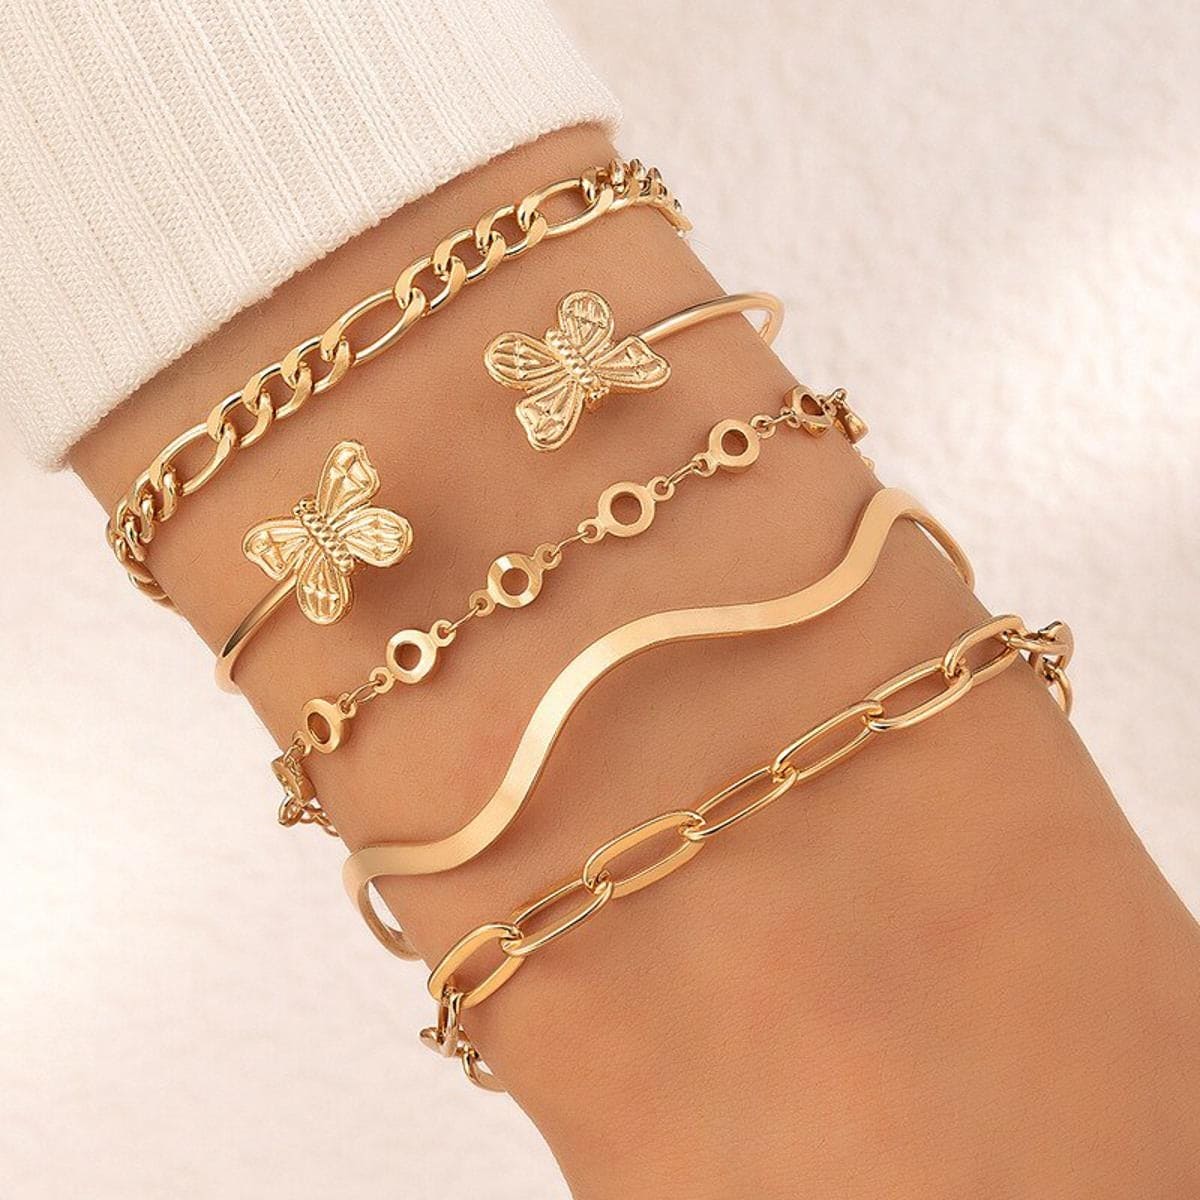 Trendy Geometric Link Chain Bracelet Set, Multilayer Gold Color Bracelet, Twist Cuban Chain Bracelet for Women, Wedding Engagement Bracelet Fashion Jewellery